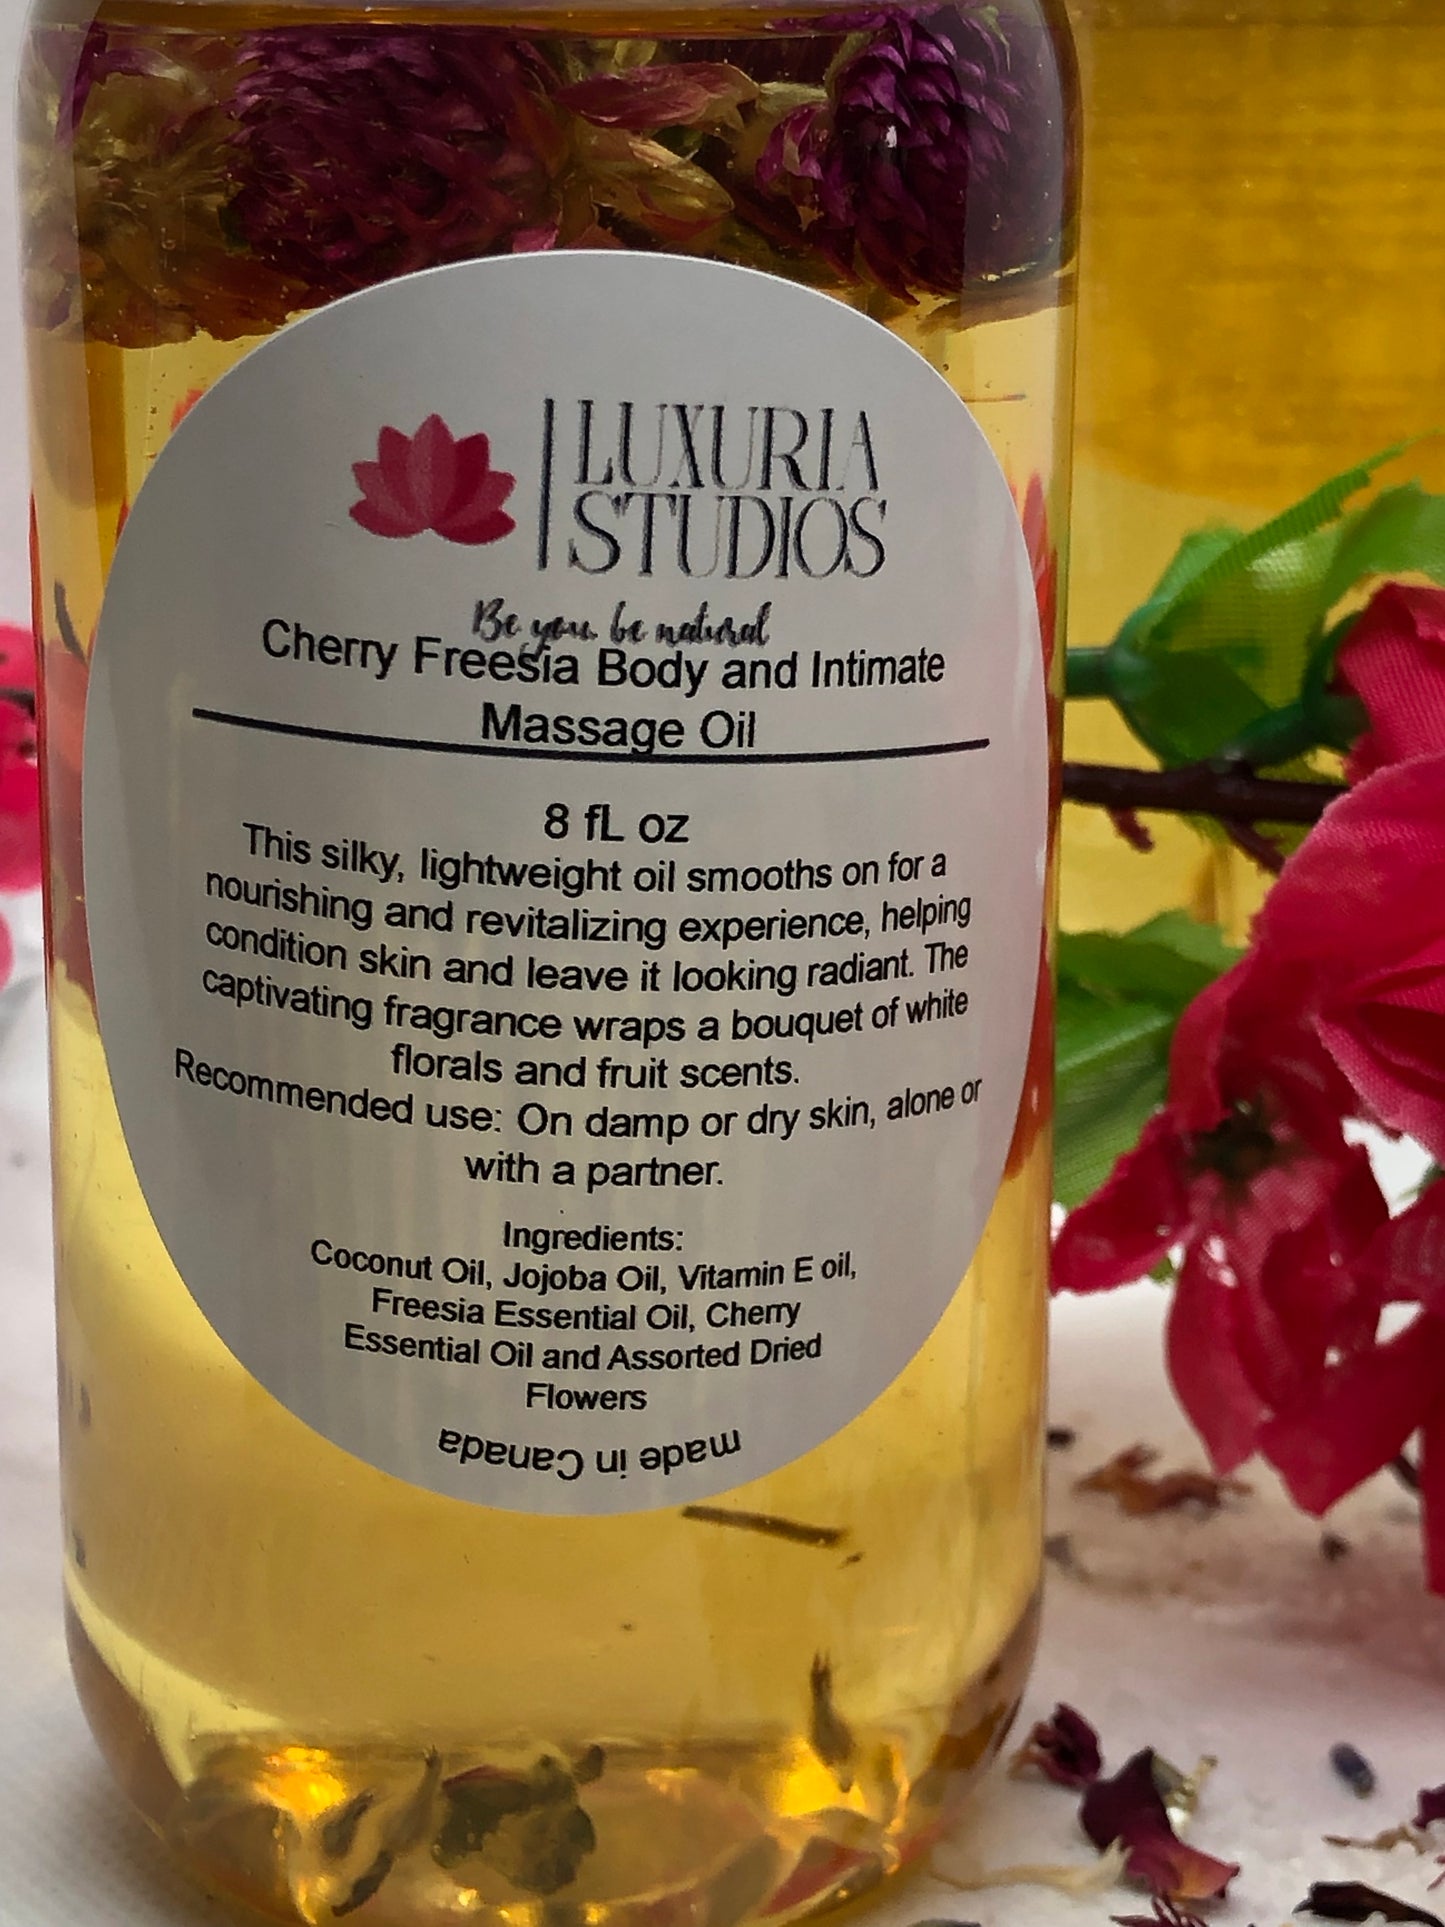 Cherry Freesia Body and Intimate Massage Oil